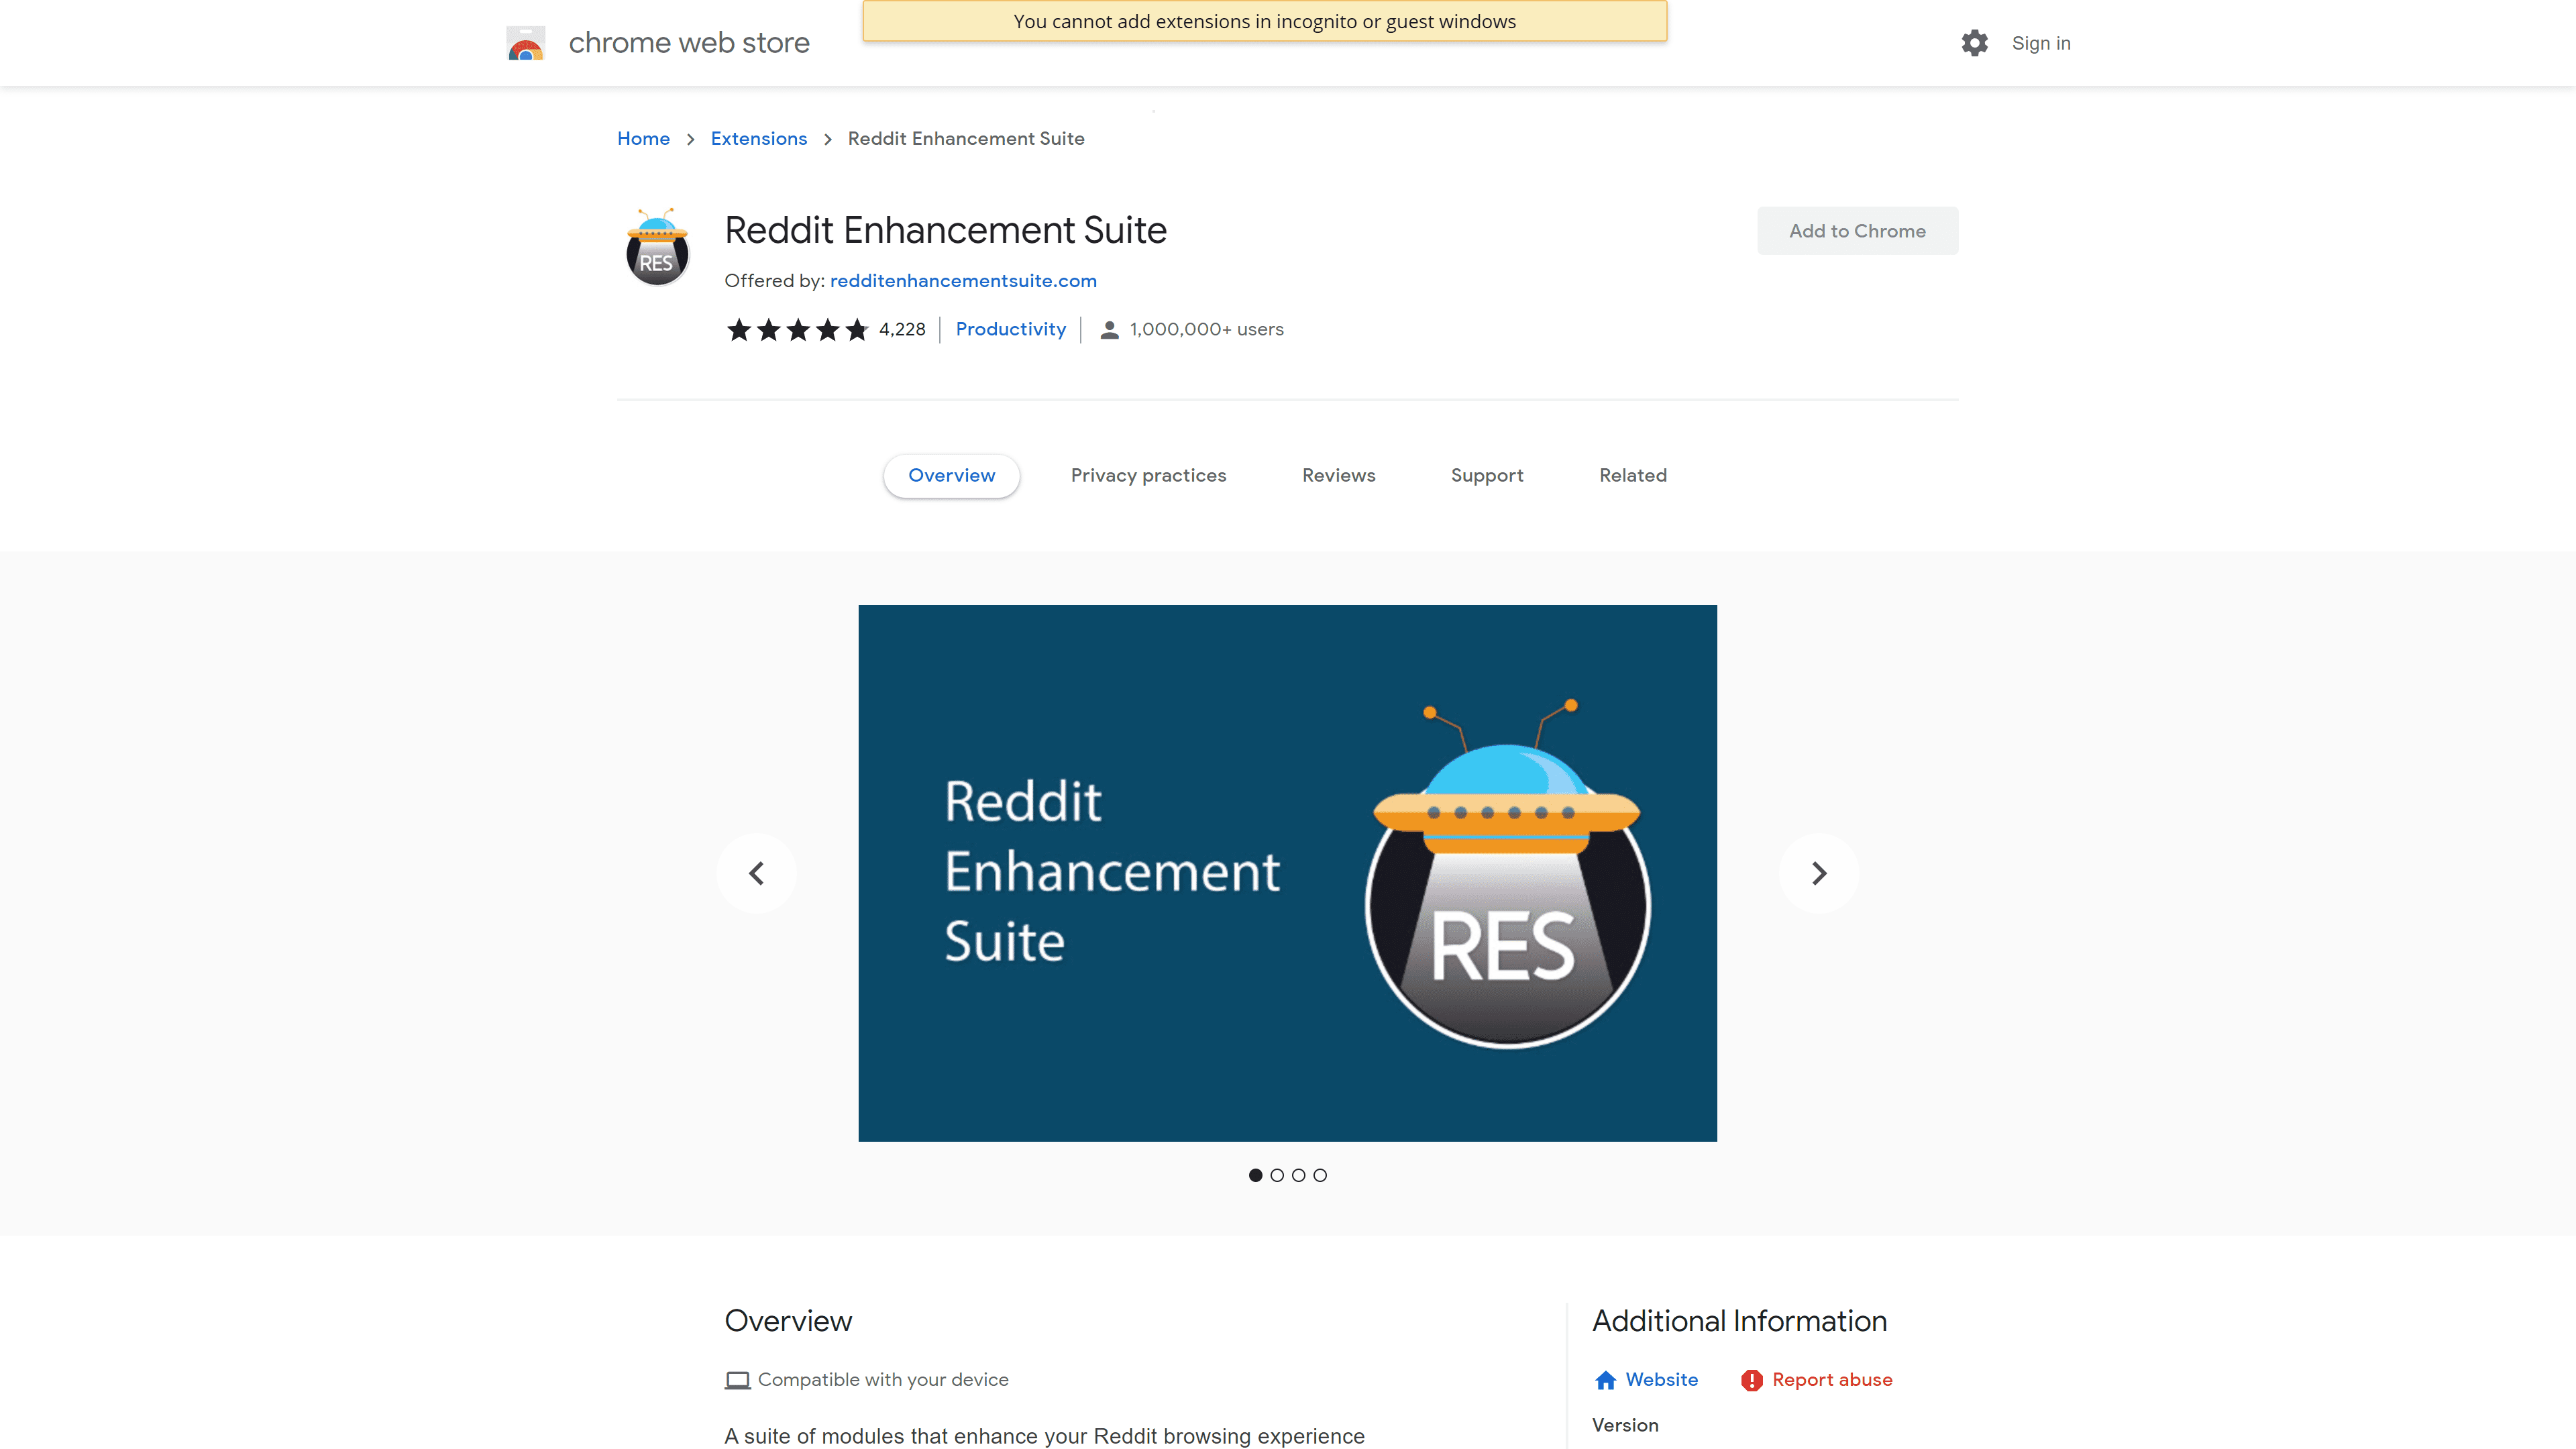 Reddit Enhancement Suite